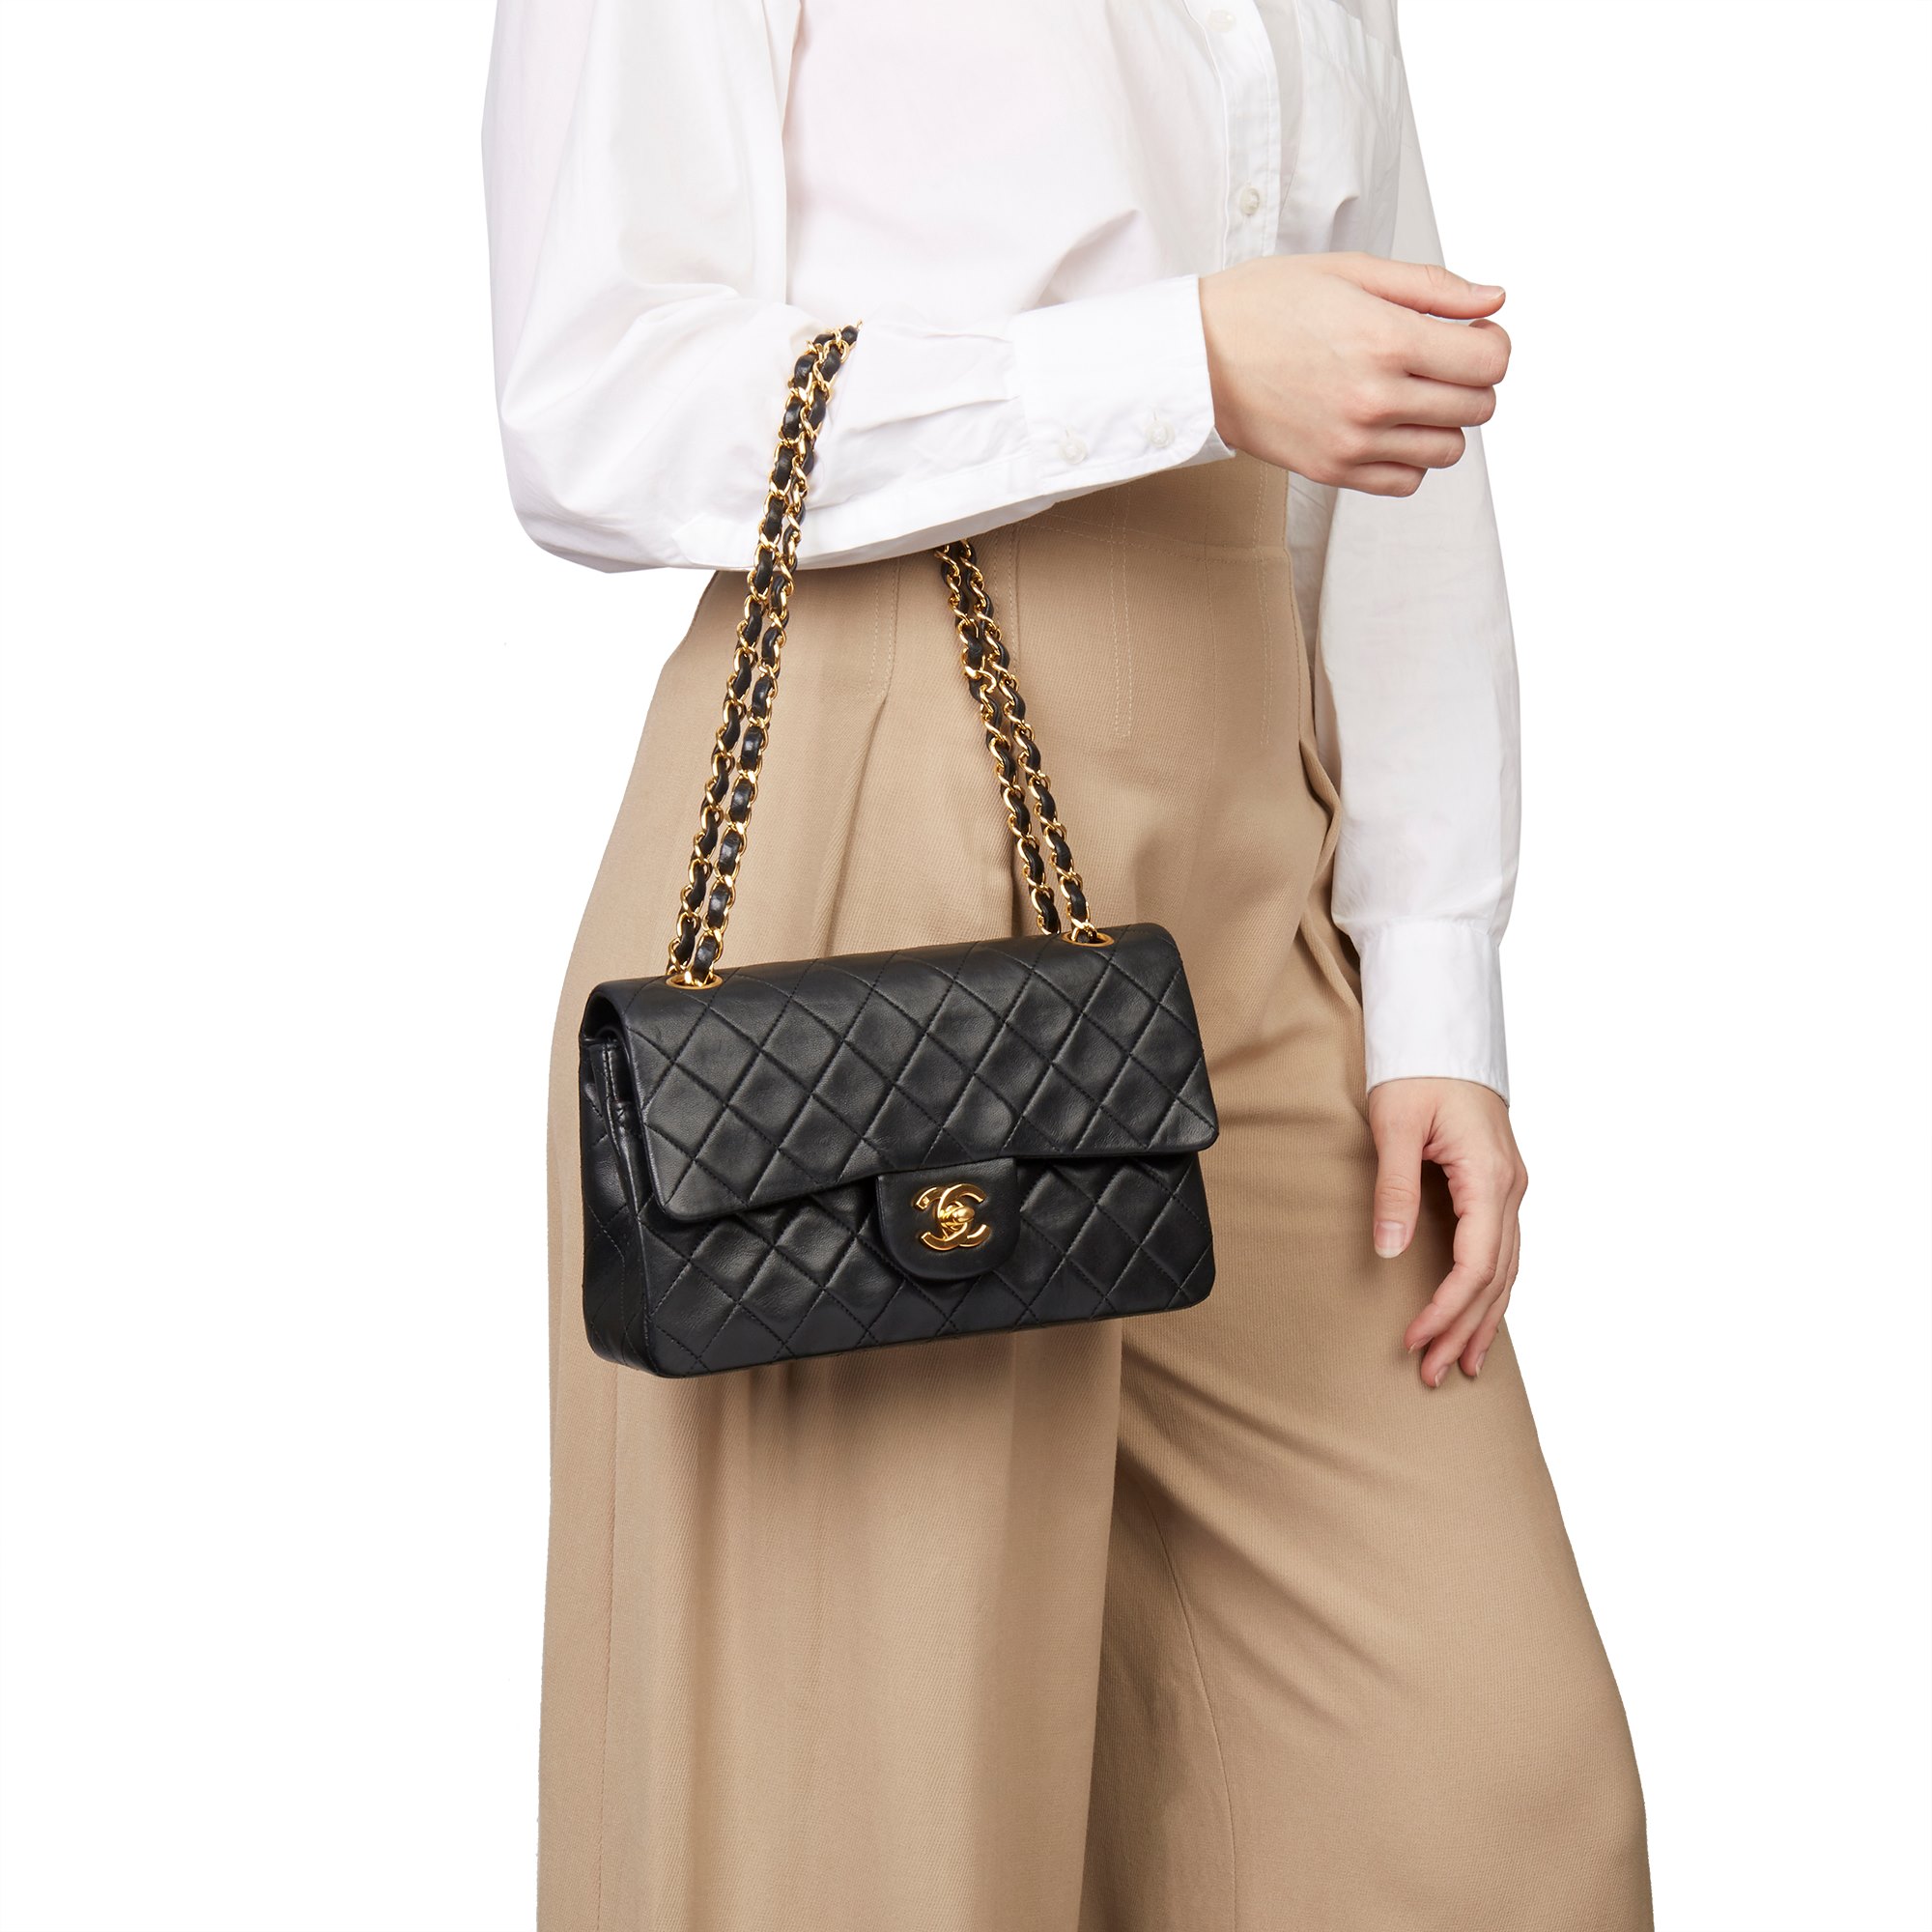 Vintage Chanel Small Flap Bag Deals, SAVE 55%.